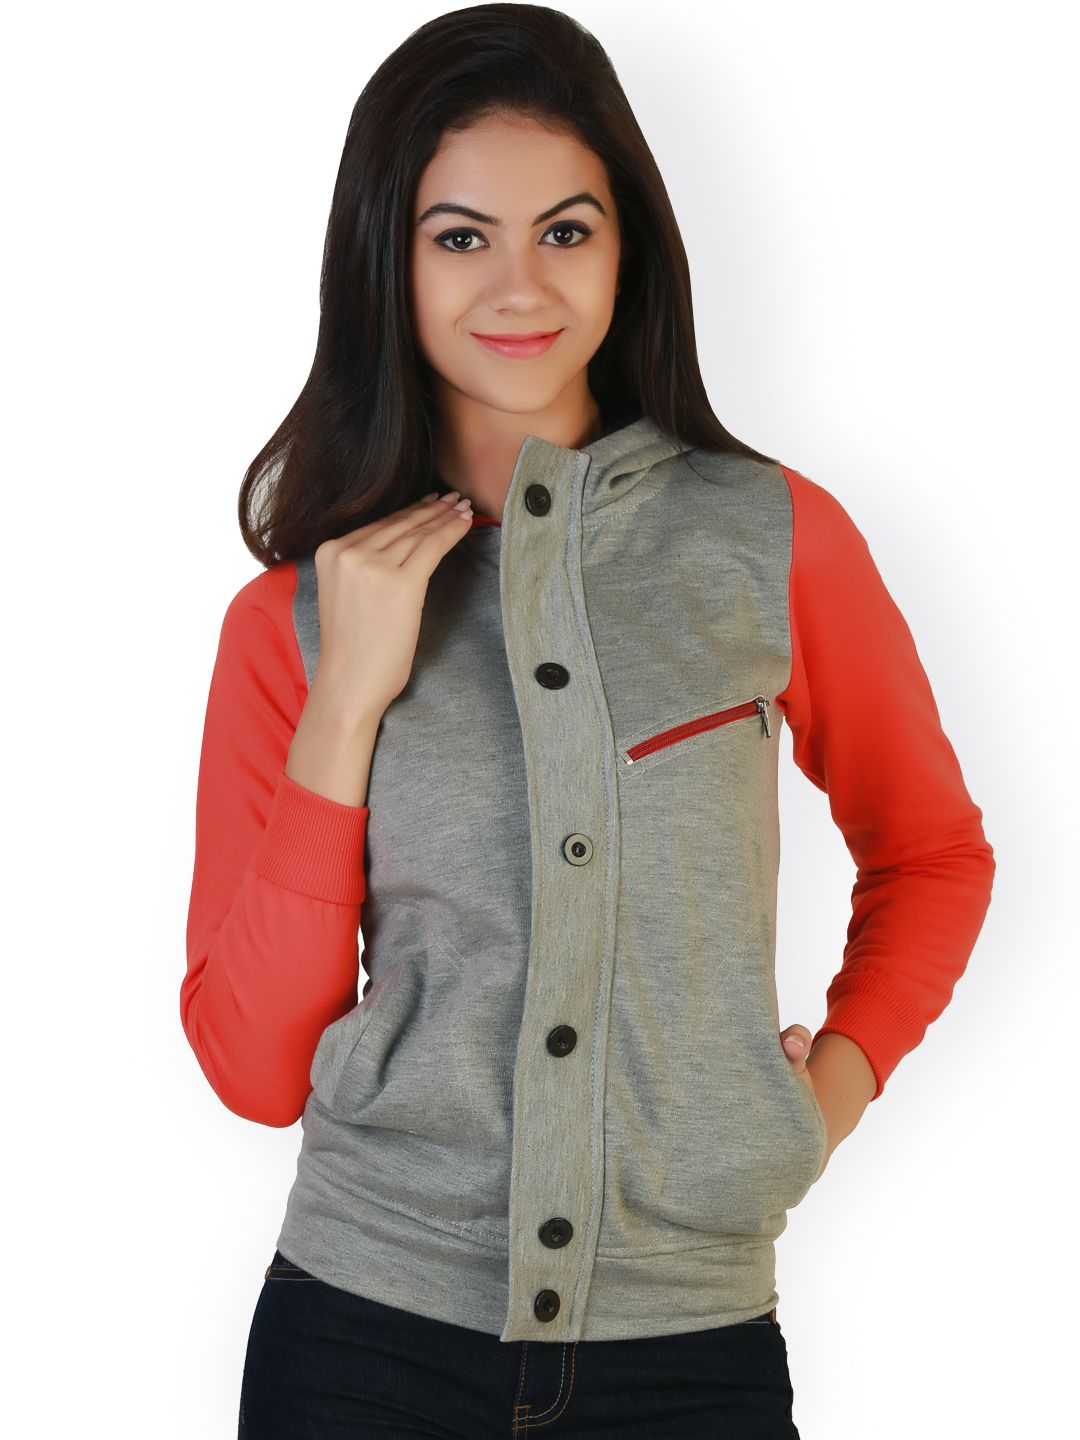 Belle Fille Grey & Orange Jacket Price in India